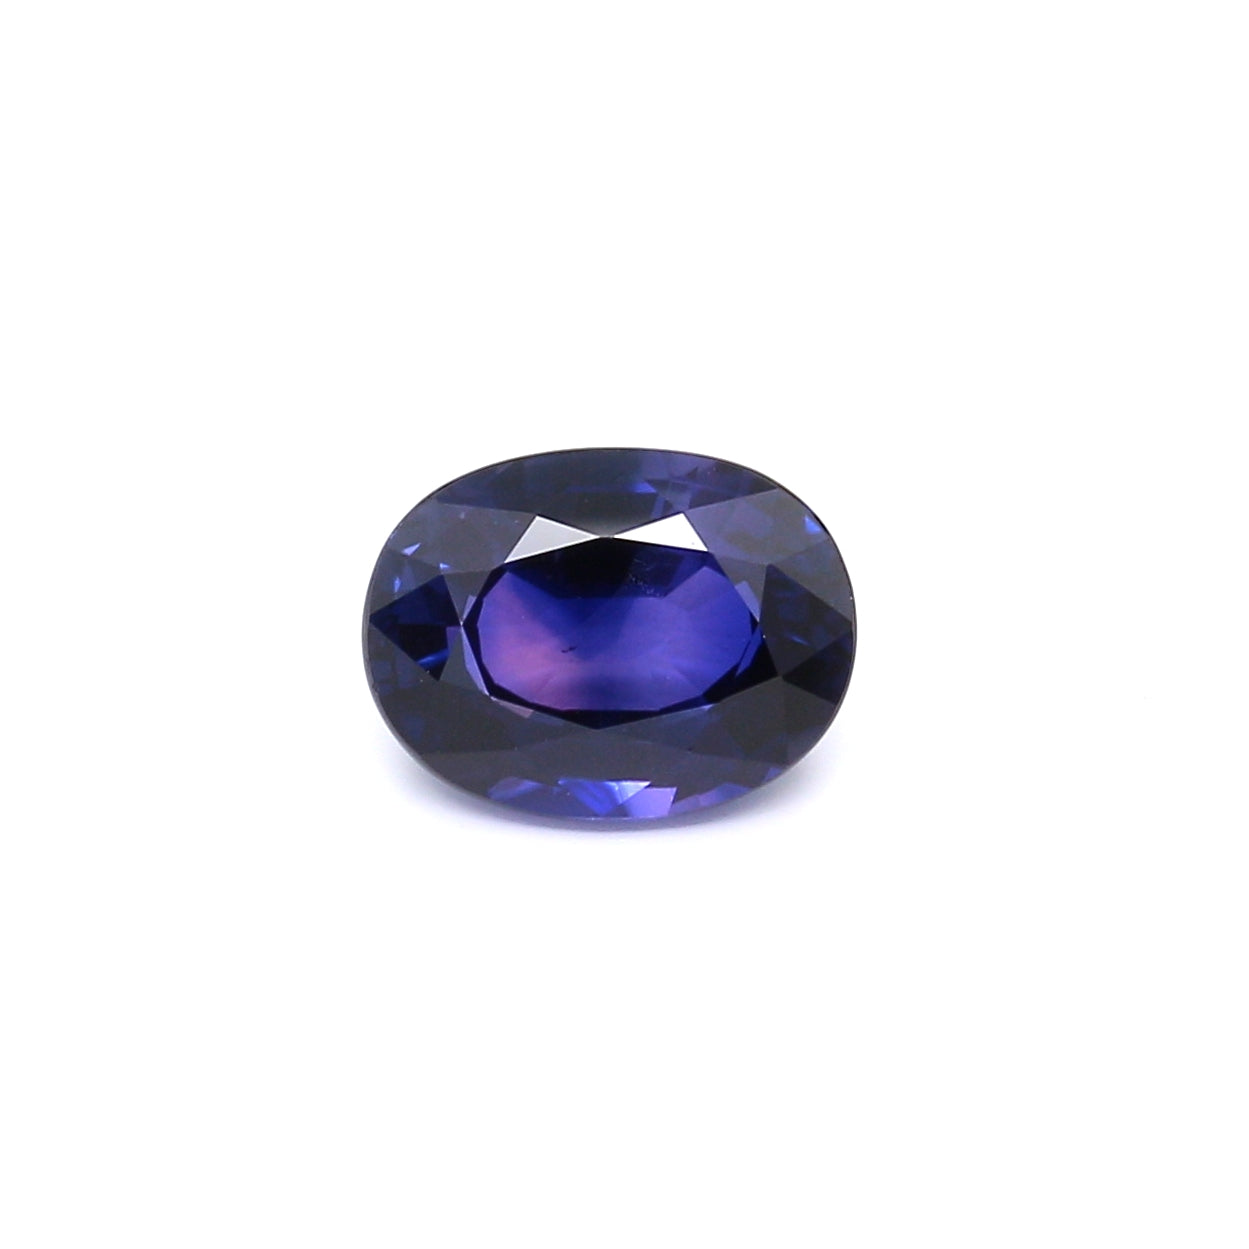 2.13ct Violetish Blue / Purple, Oval Color Change Sapphire, No Heat, Sri Lanka - 8.66 x 6.55 x 4.09mm